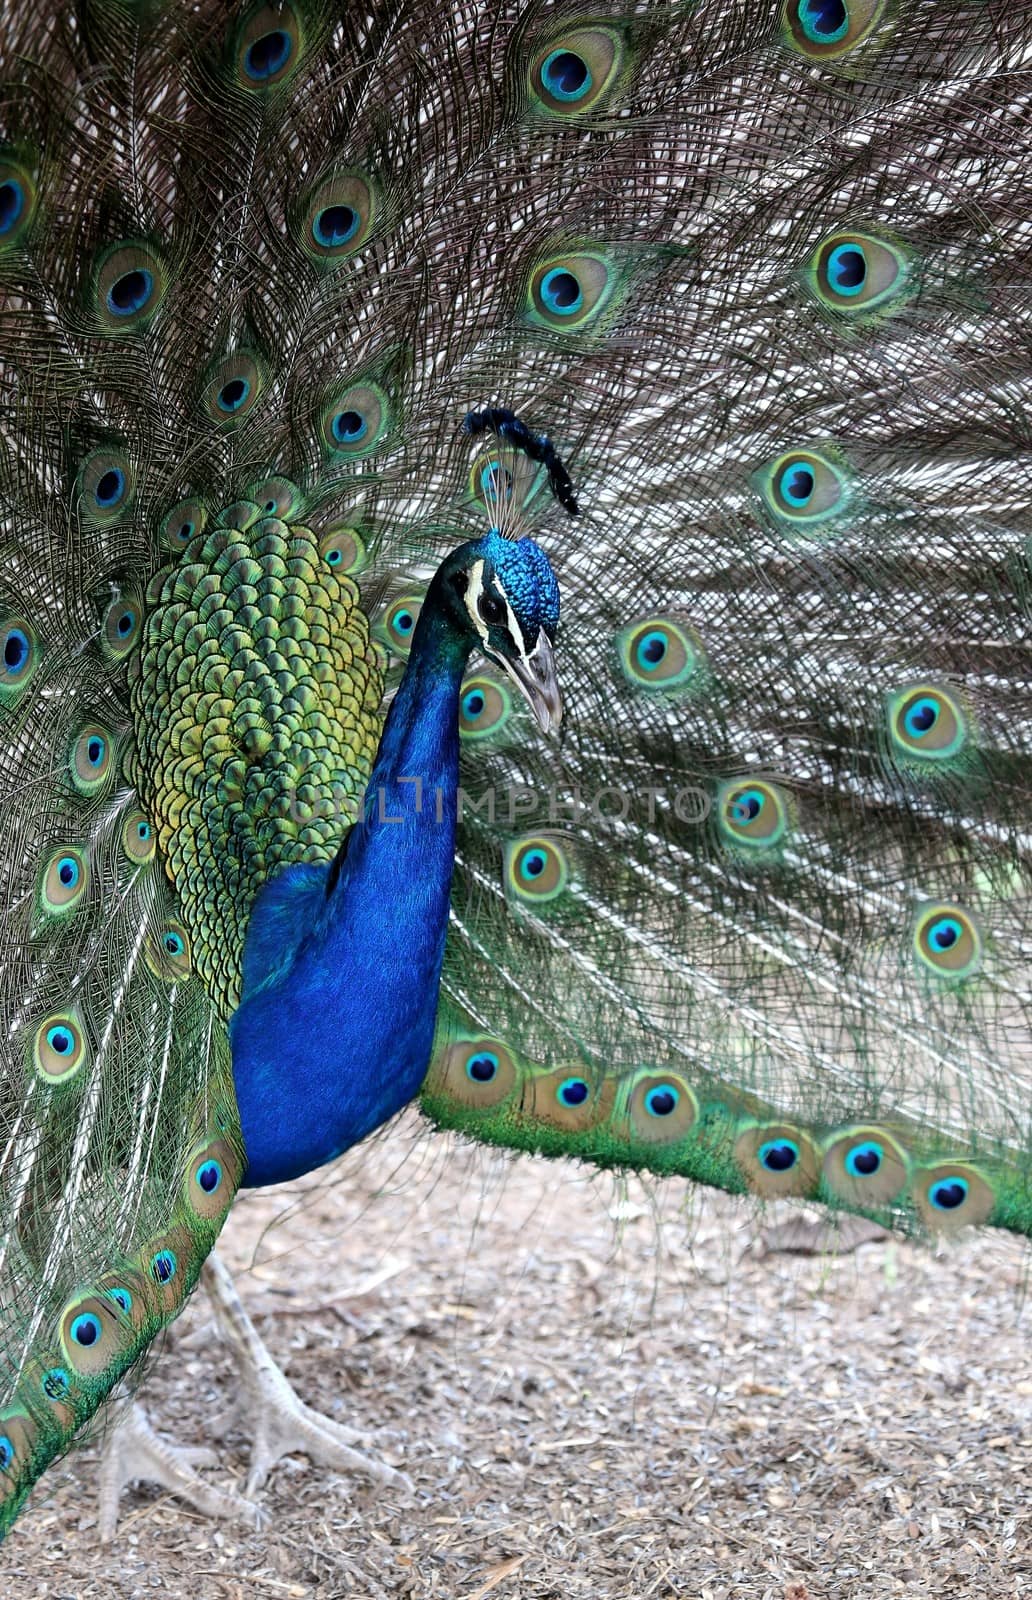 Strikingly beautiful peacock bird displaying to it's mate